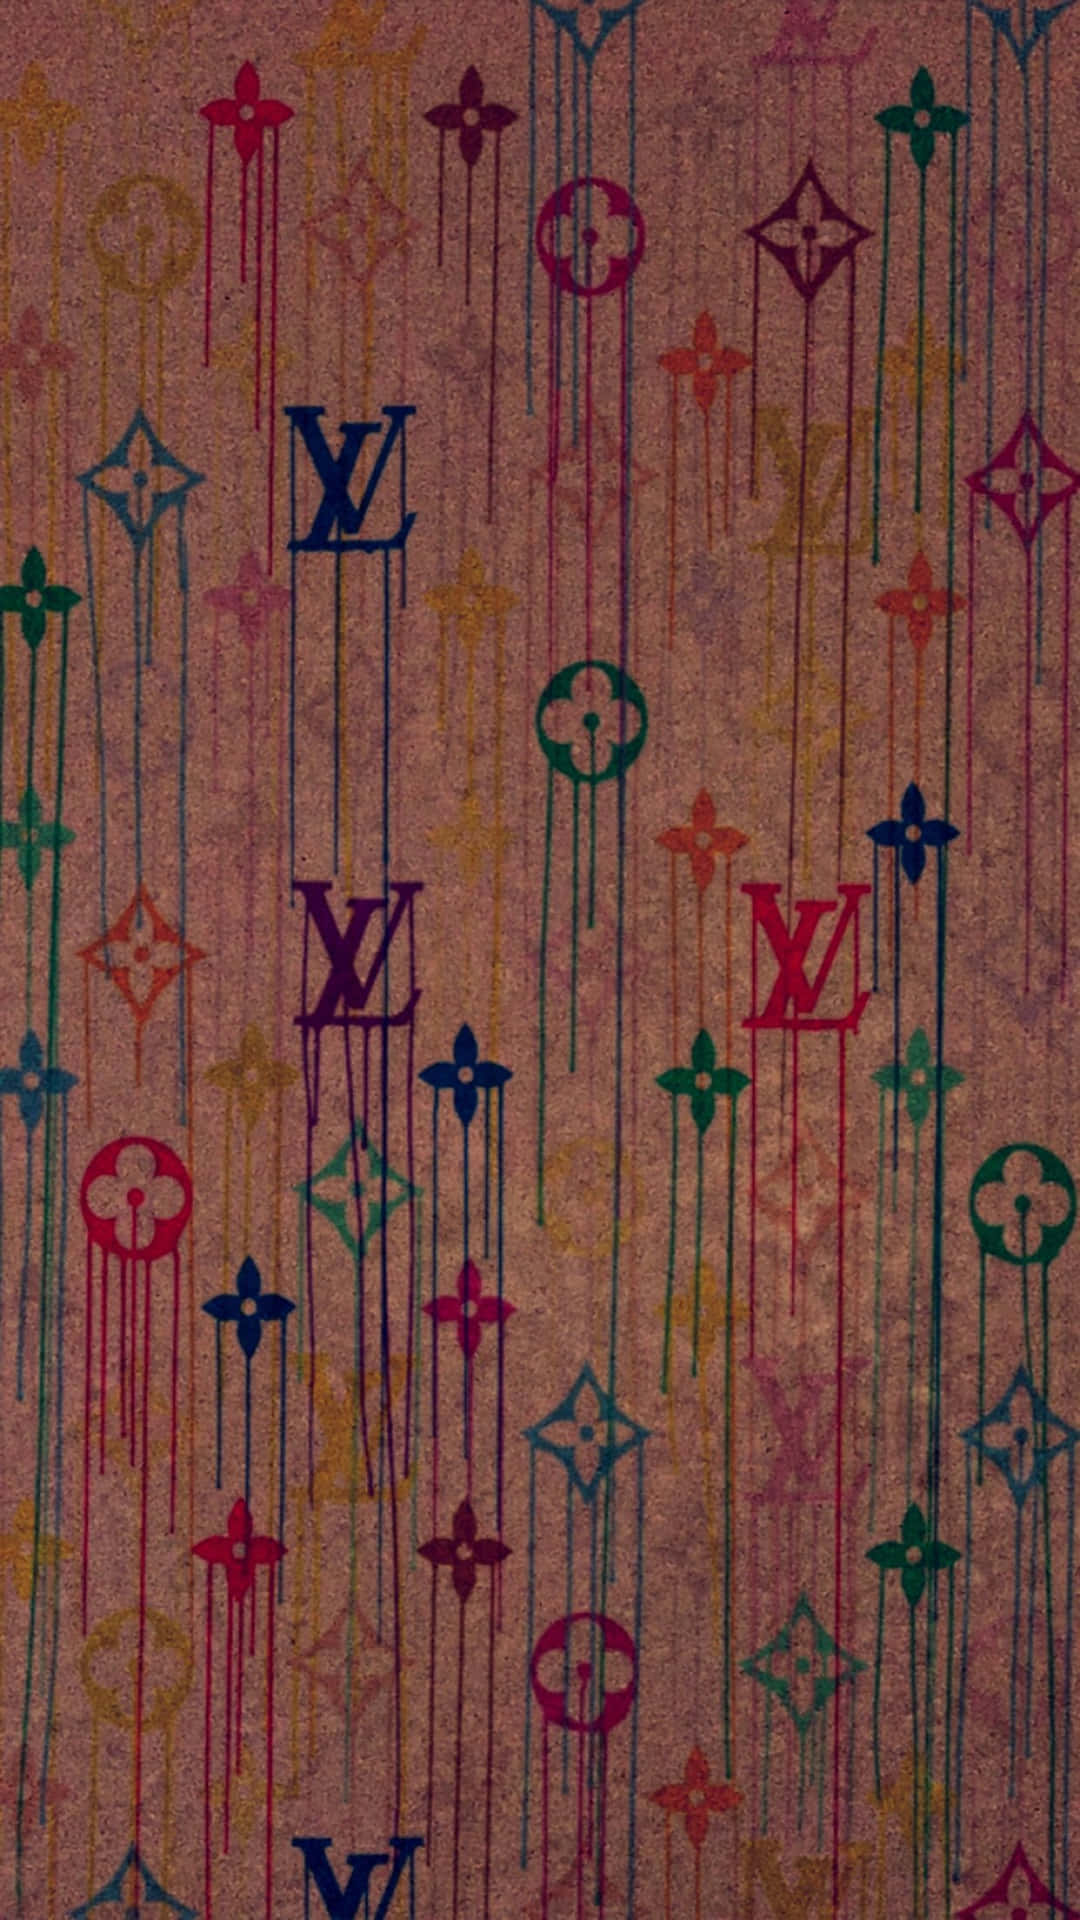 Louis Vuitton Wallpaper  Louis vuitton iphone wallpaper, Iphone wallpaper,  Pink wallpaper iphone